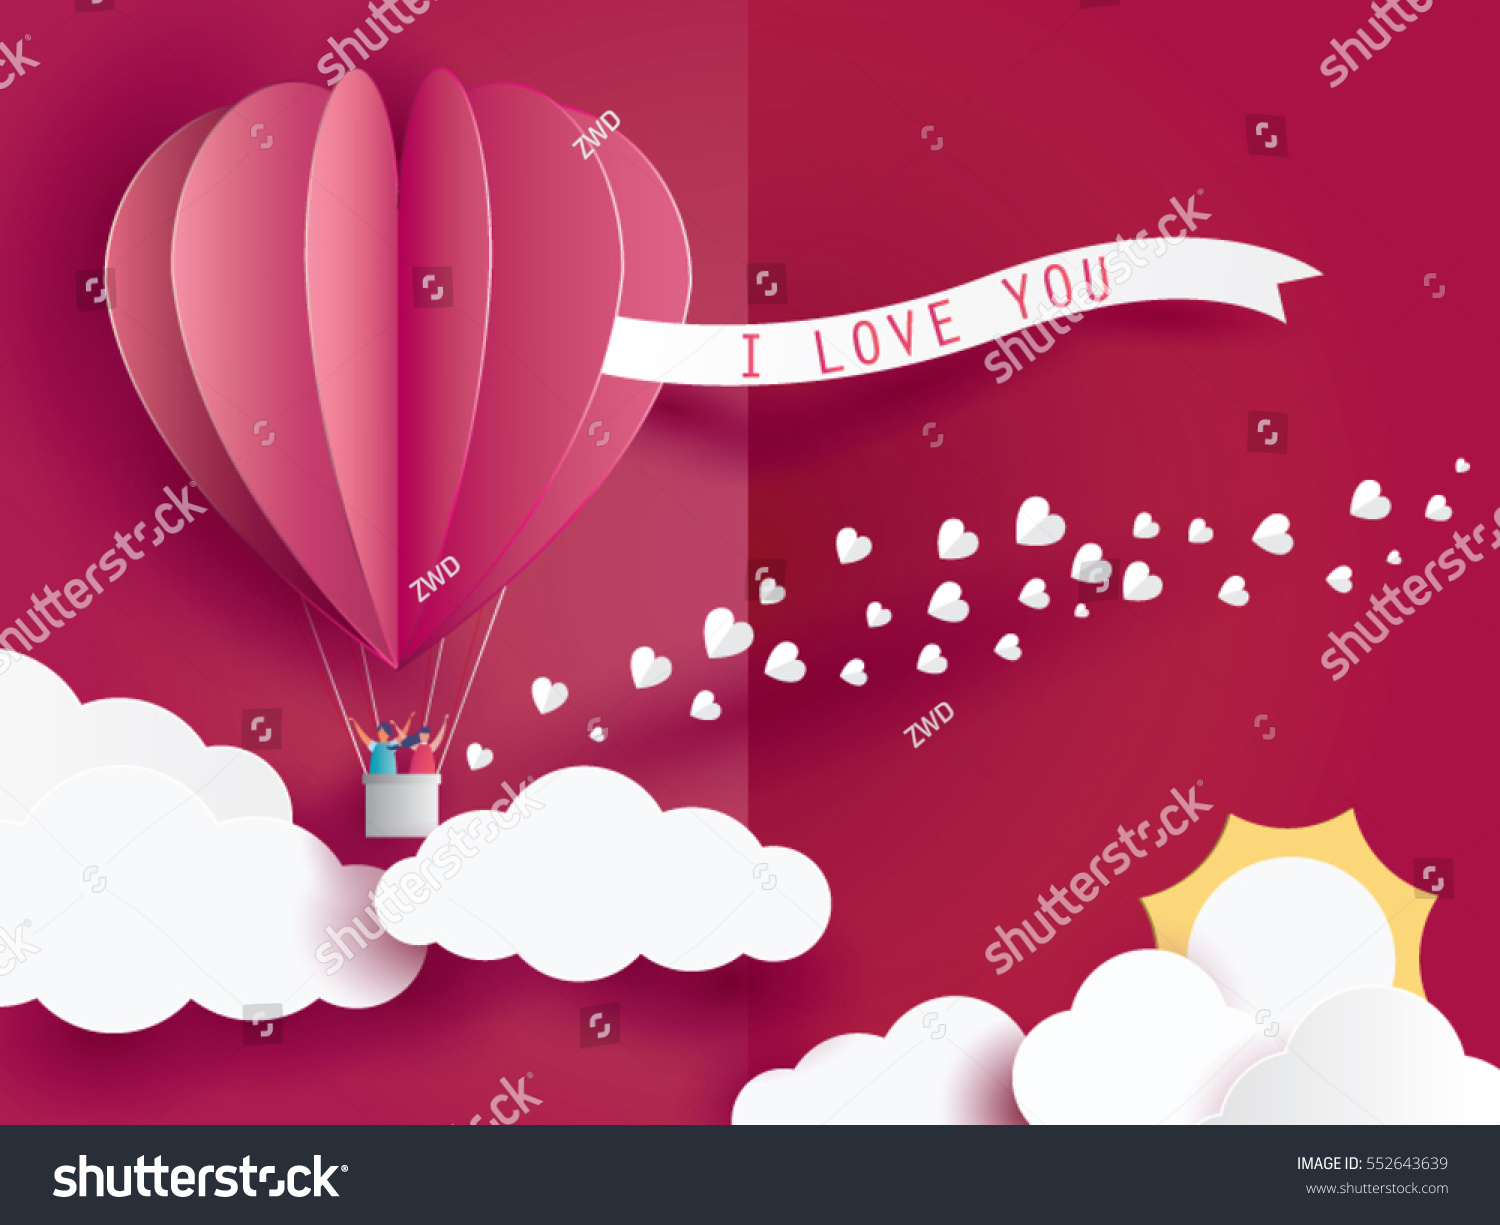 Valentine Day Pink Love Invitation Card Stock Vector ...